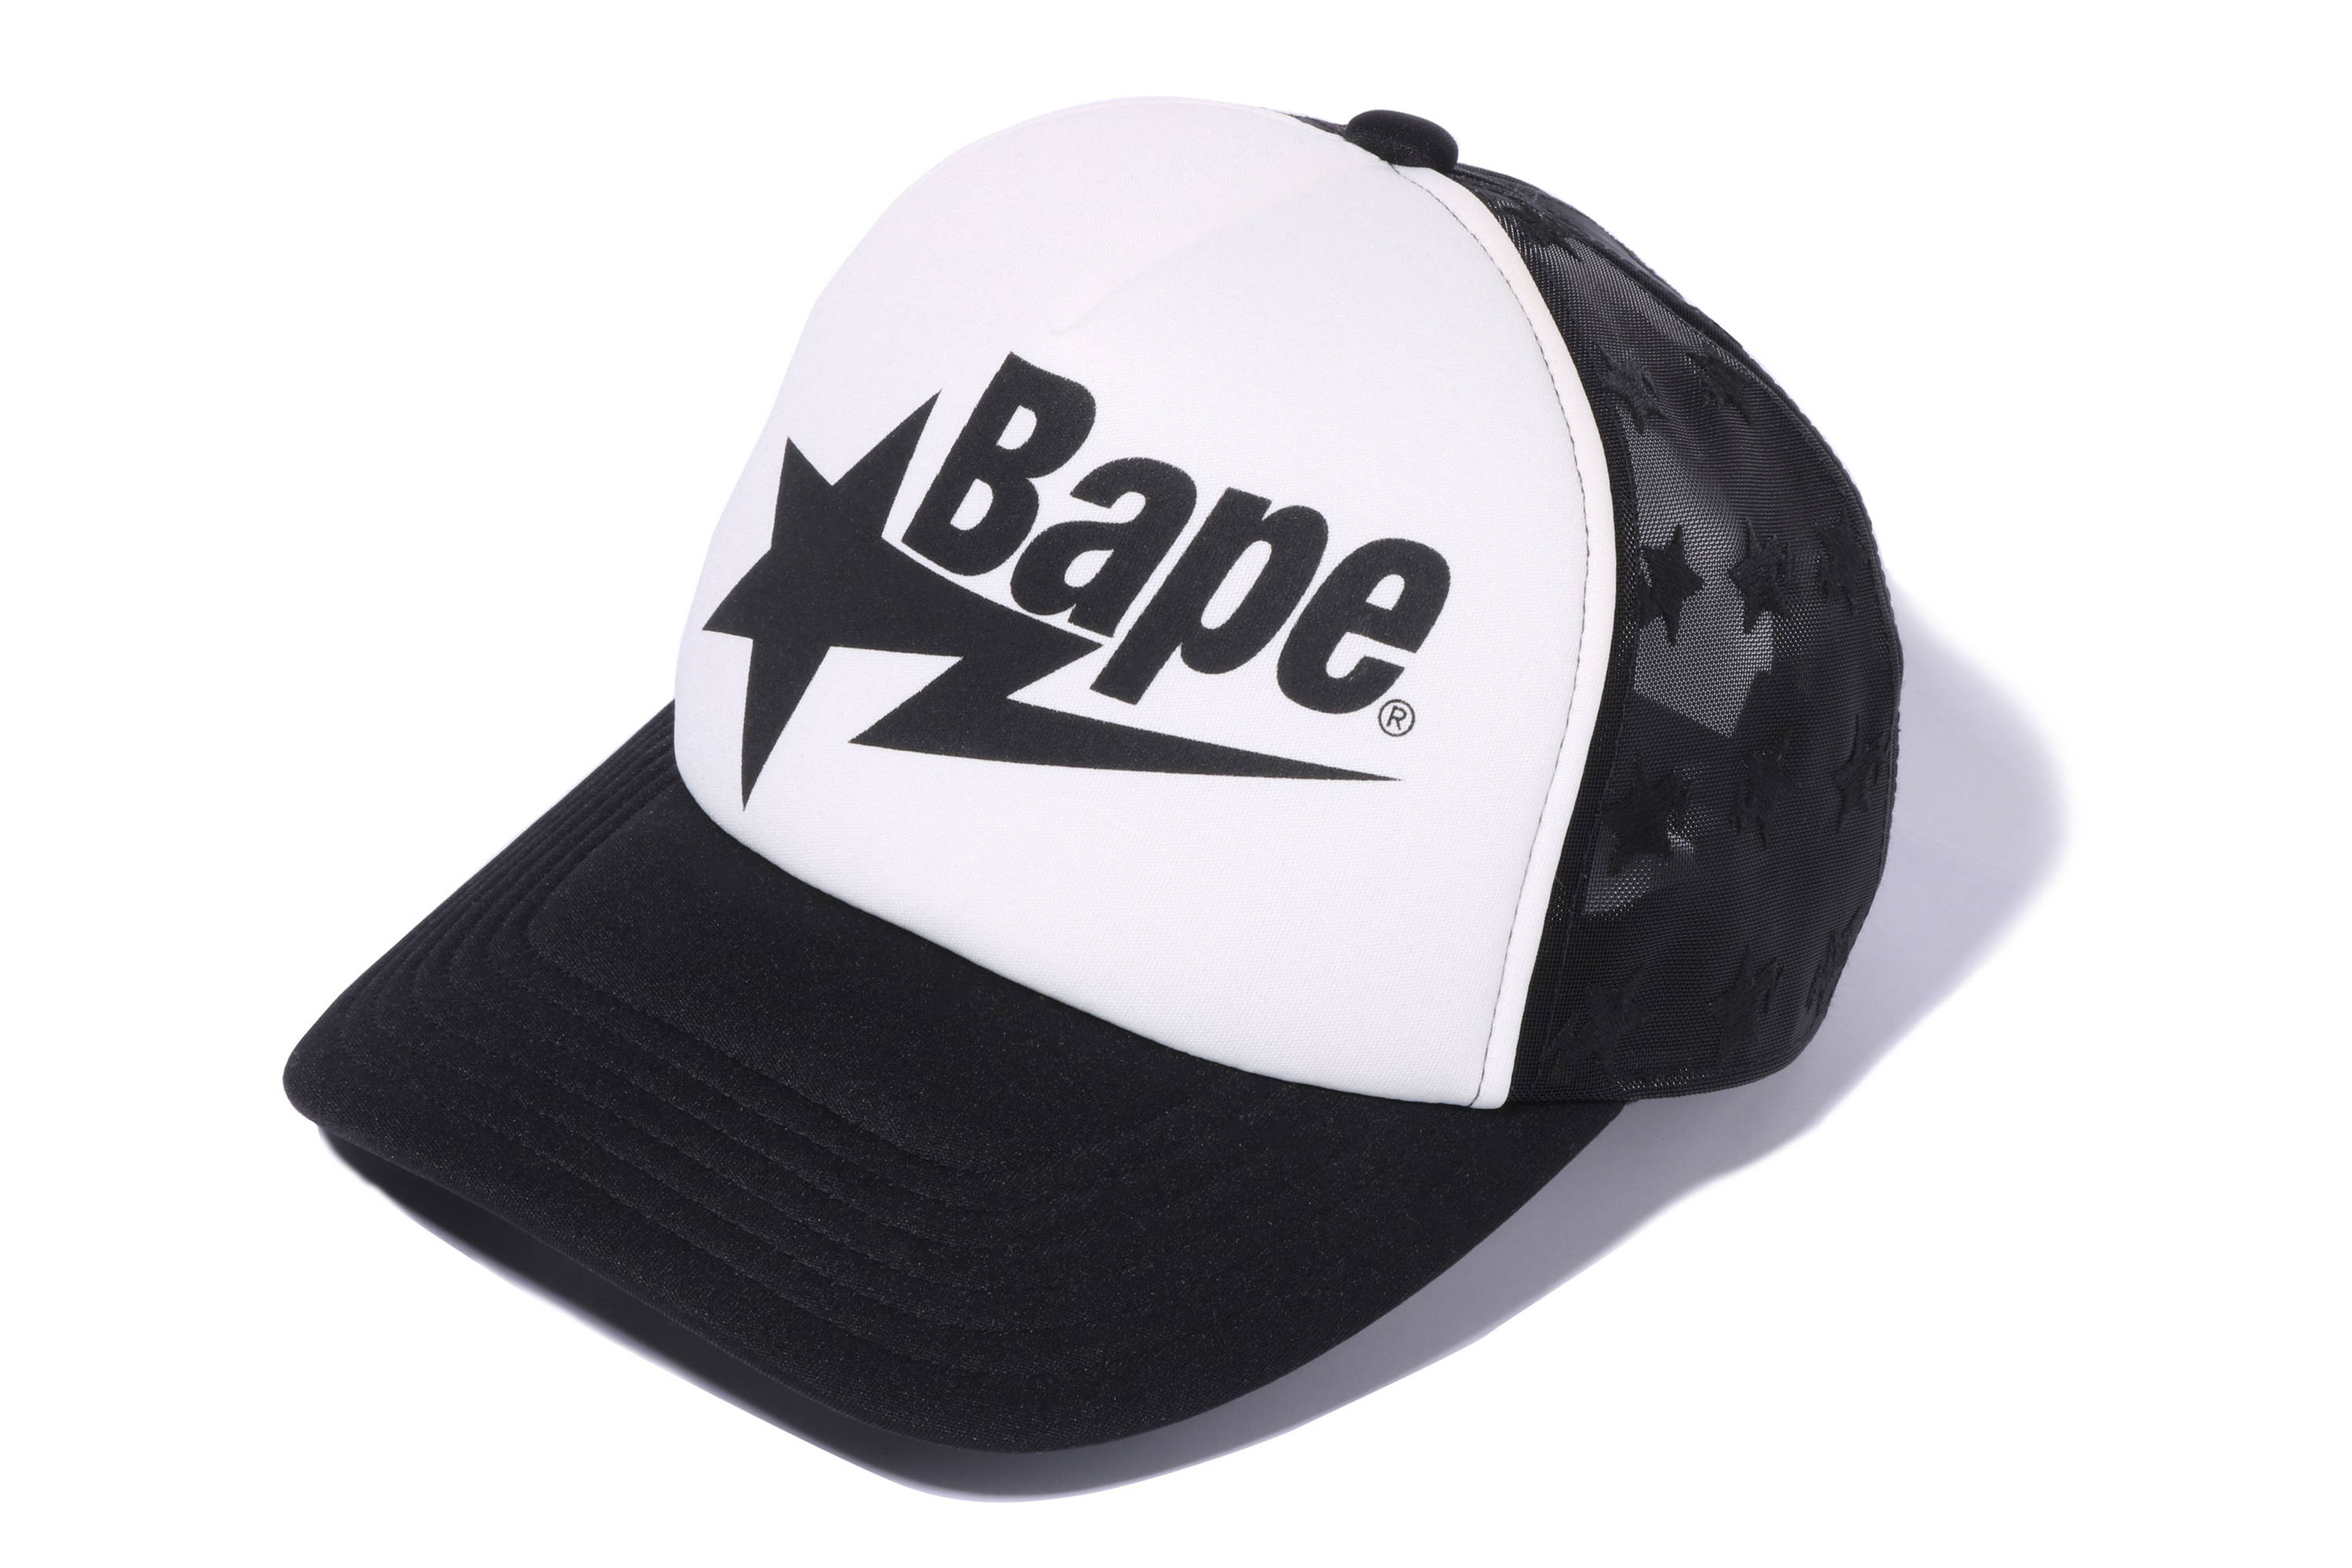 BAPE® CAP COLLECTION | bape.com